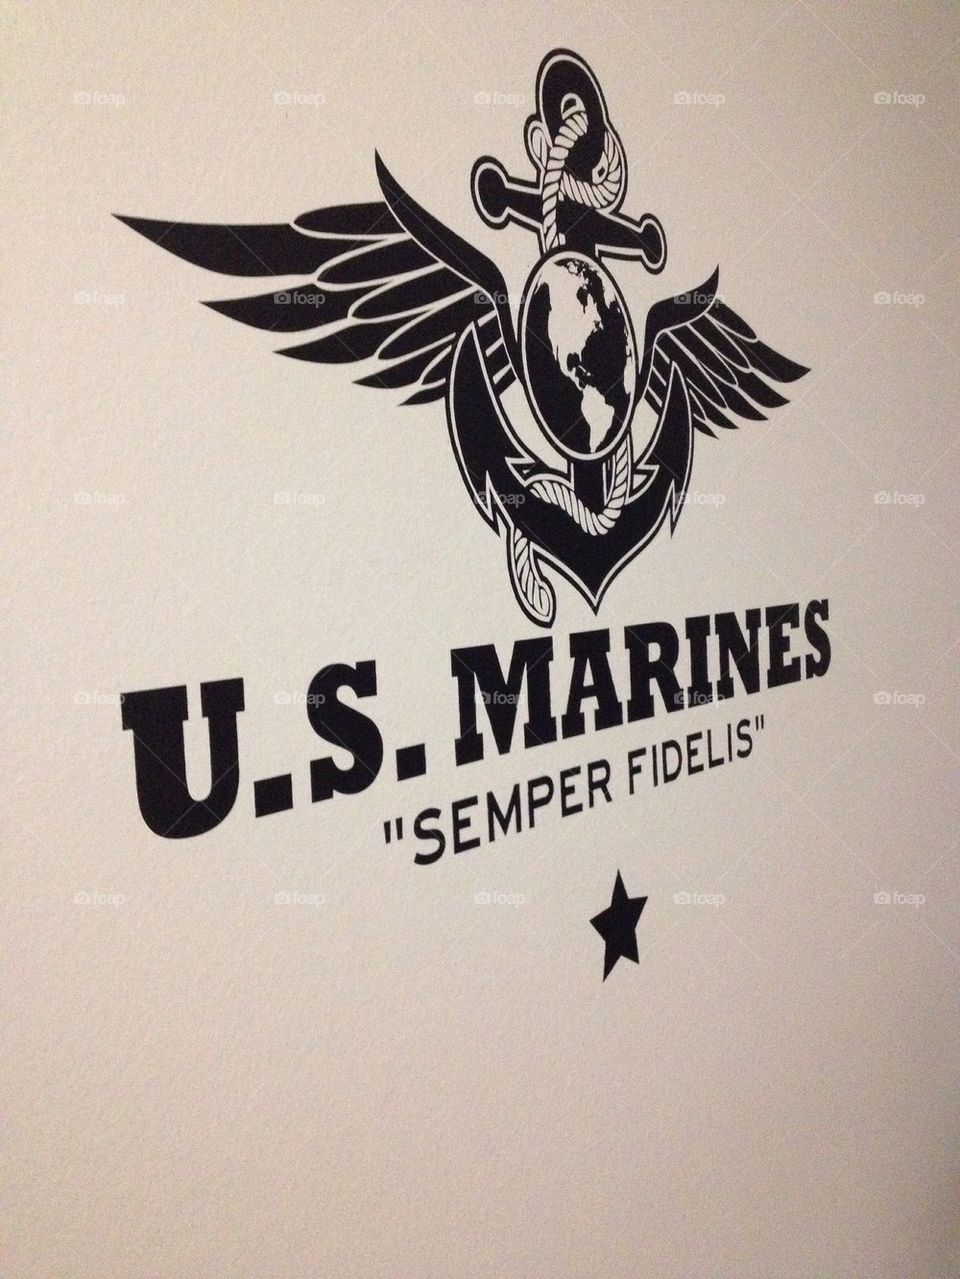 United States marine corps